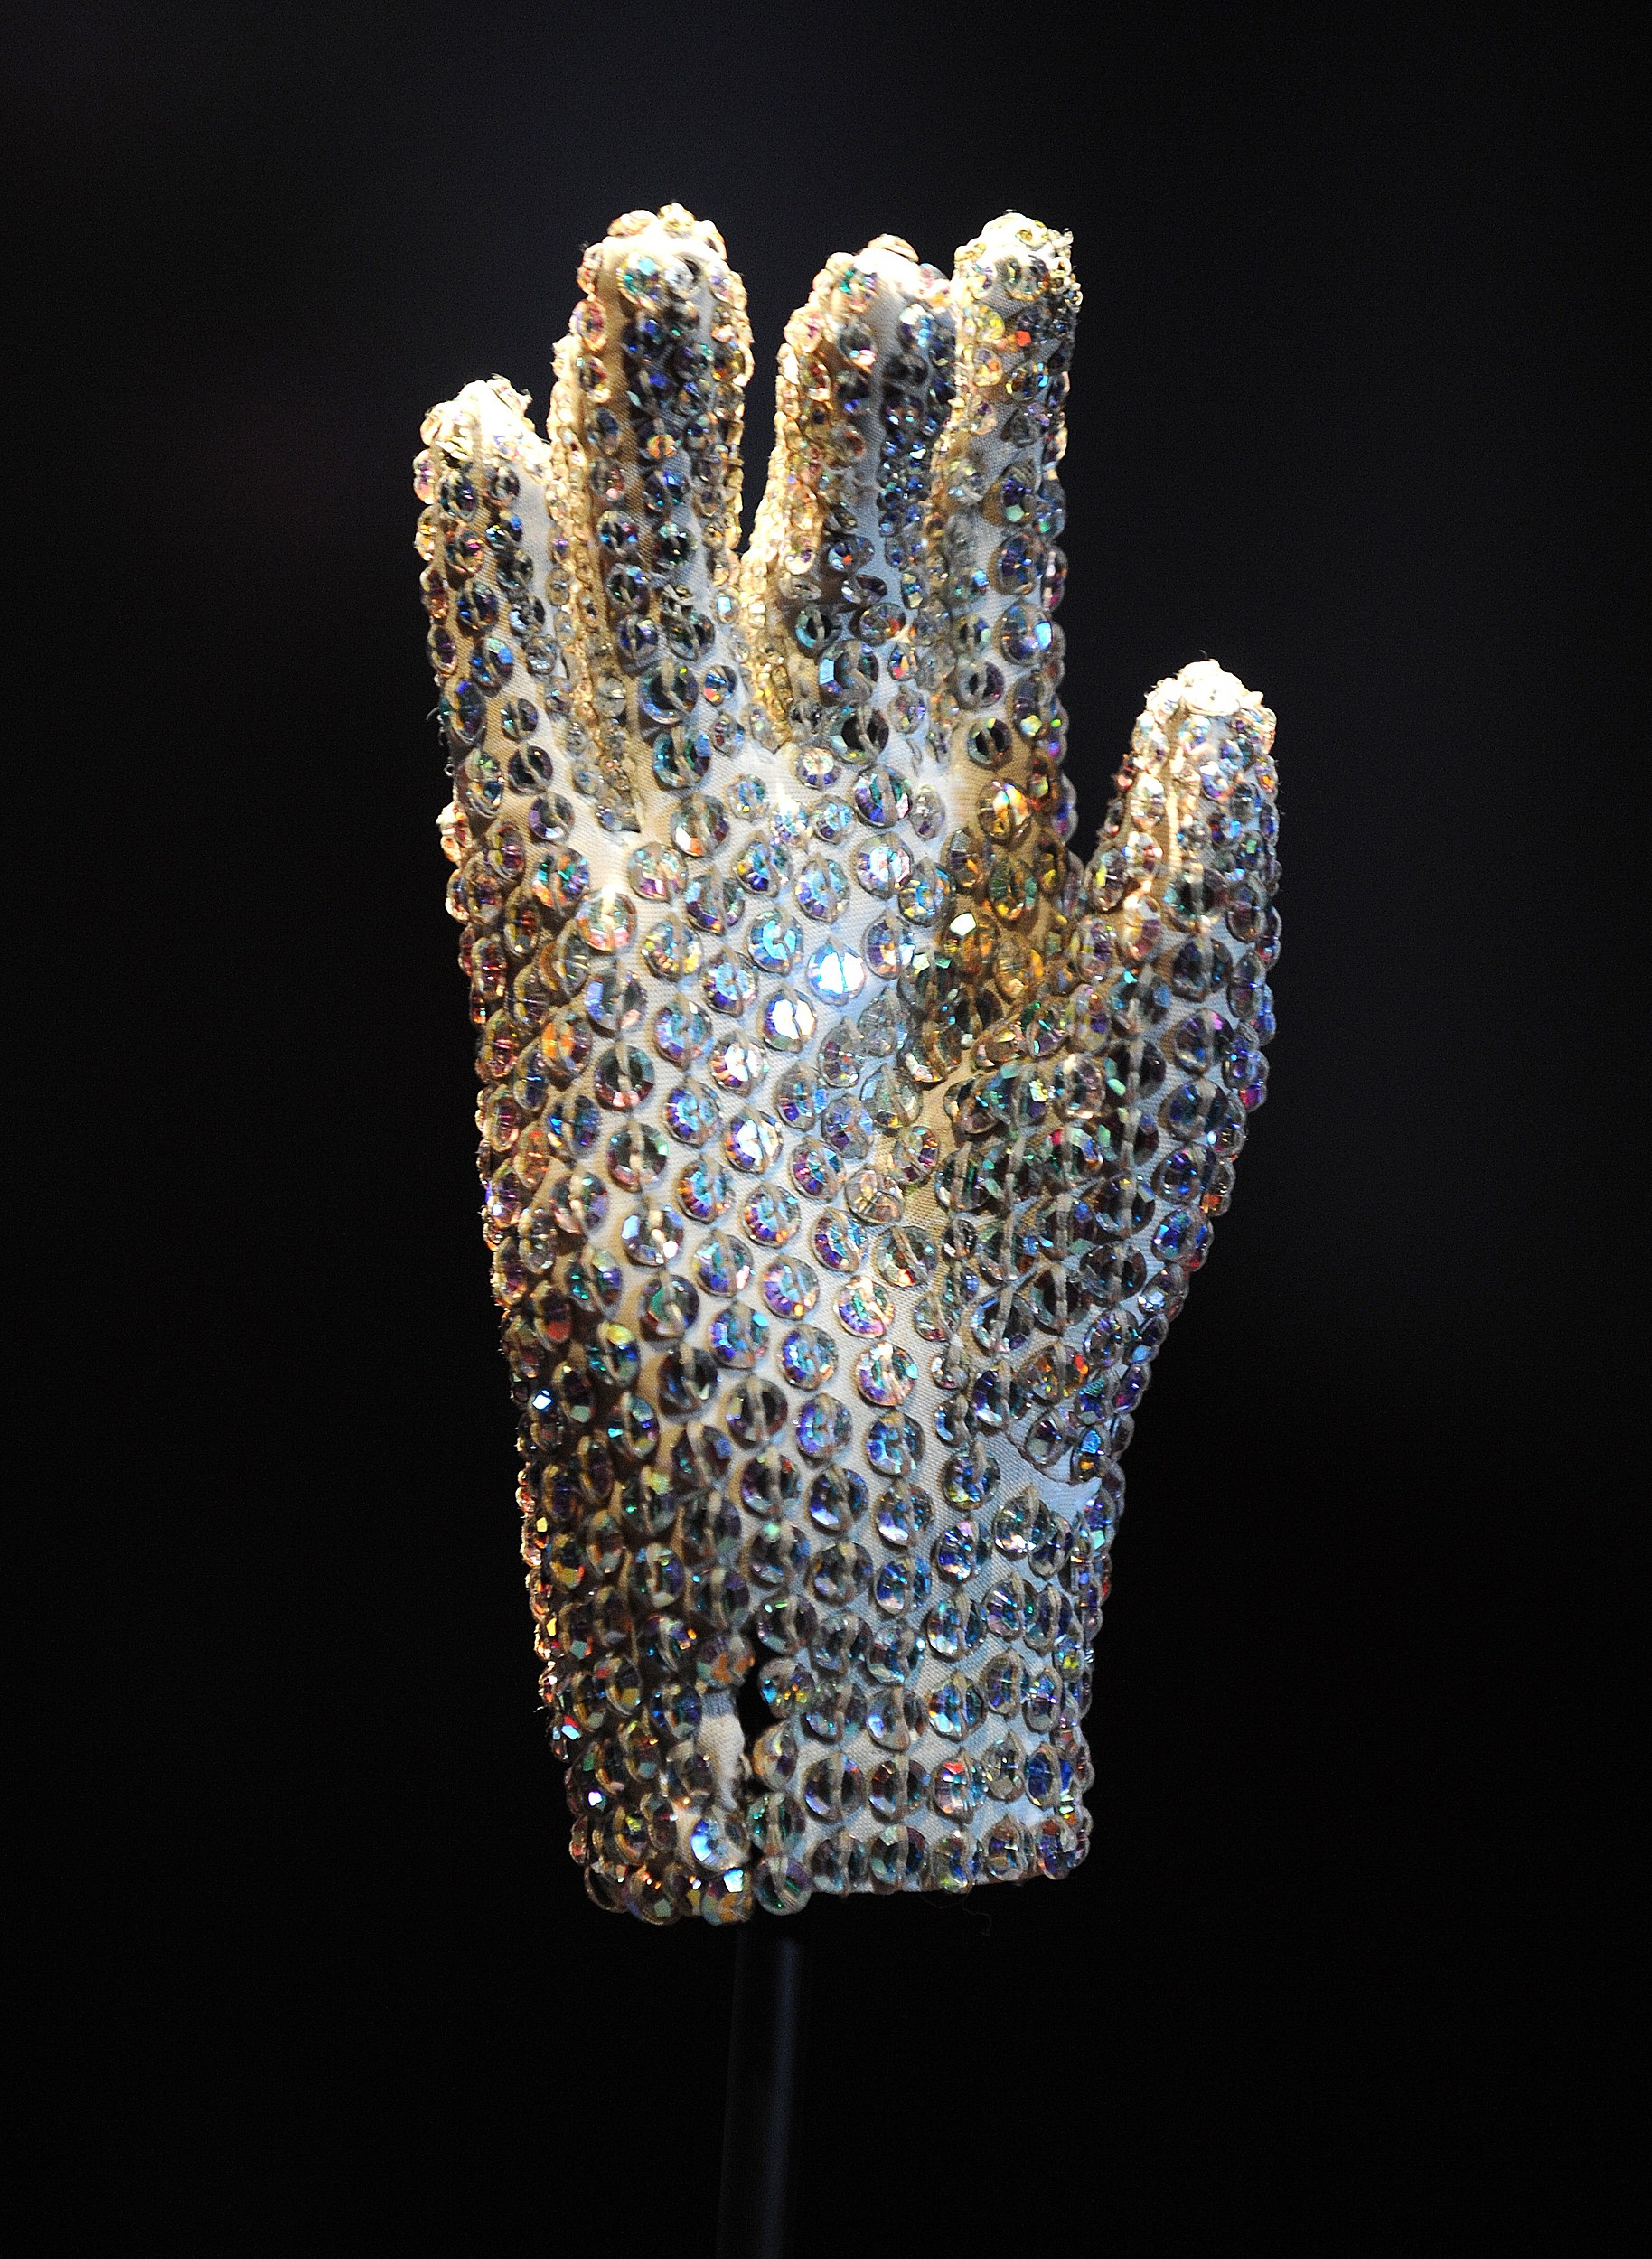 Michael Jackson Glove Collection Diamond Shining India